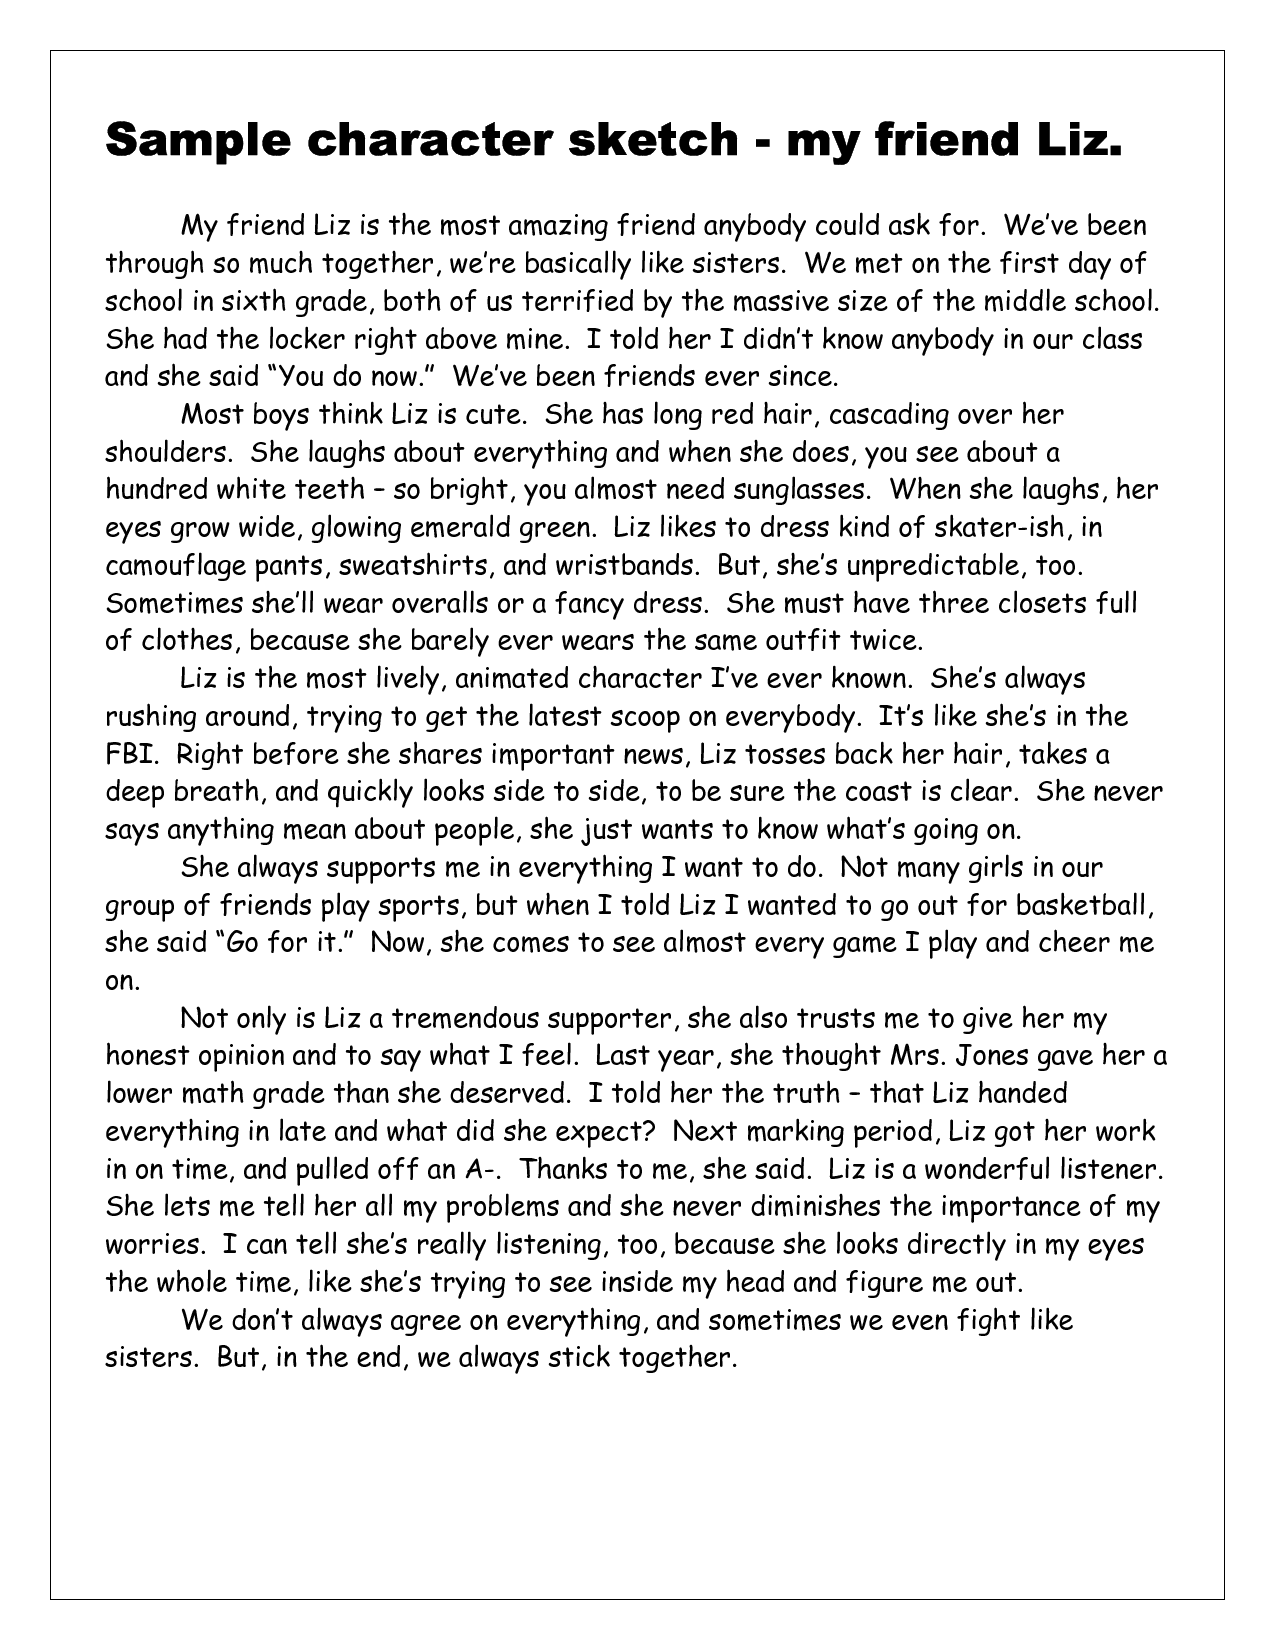 An essay on my best friend